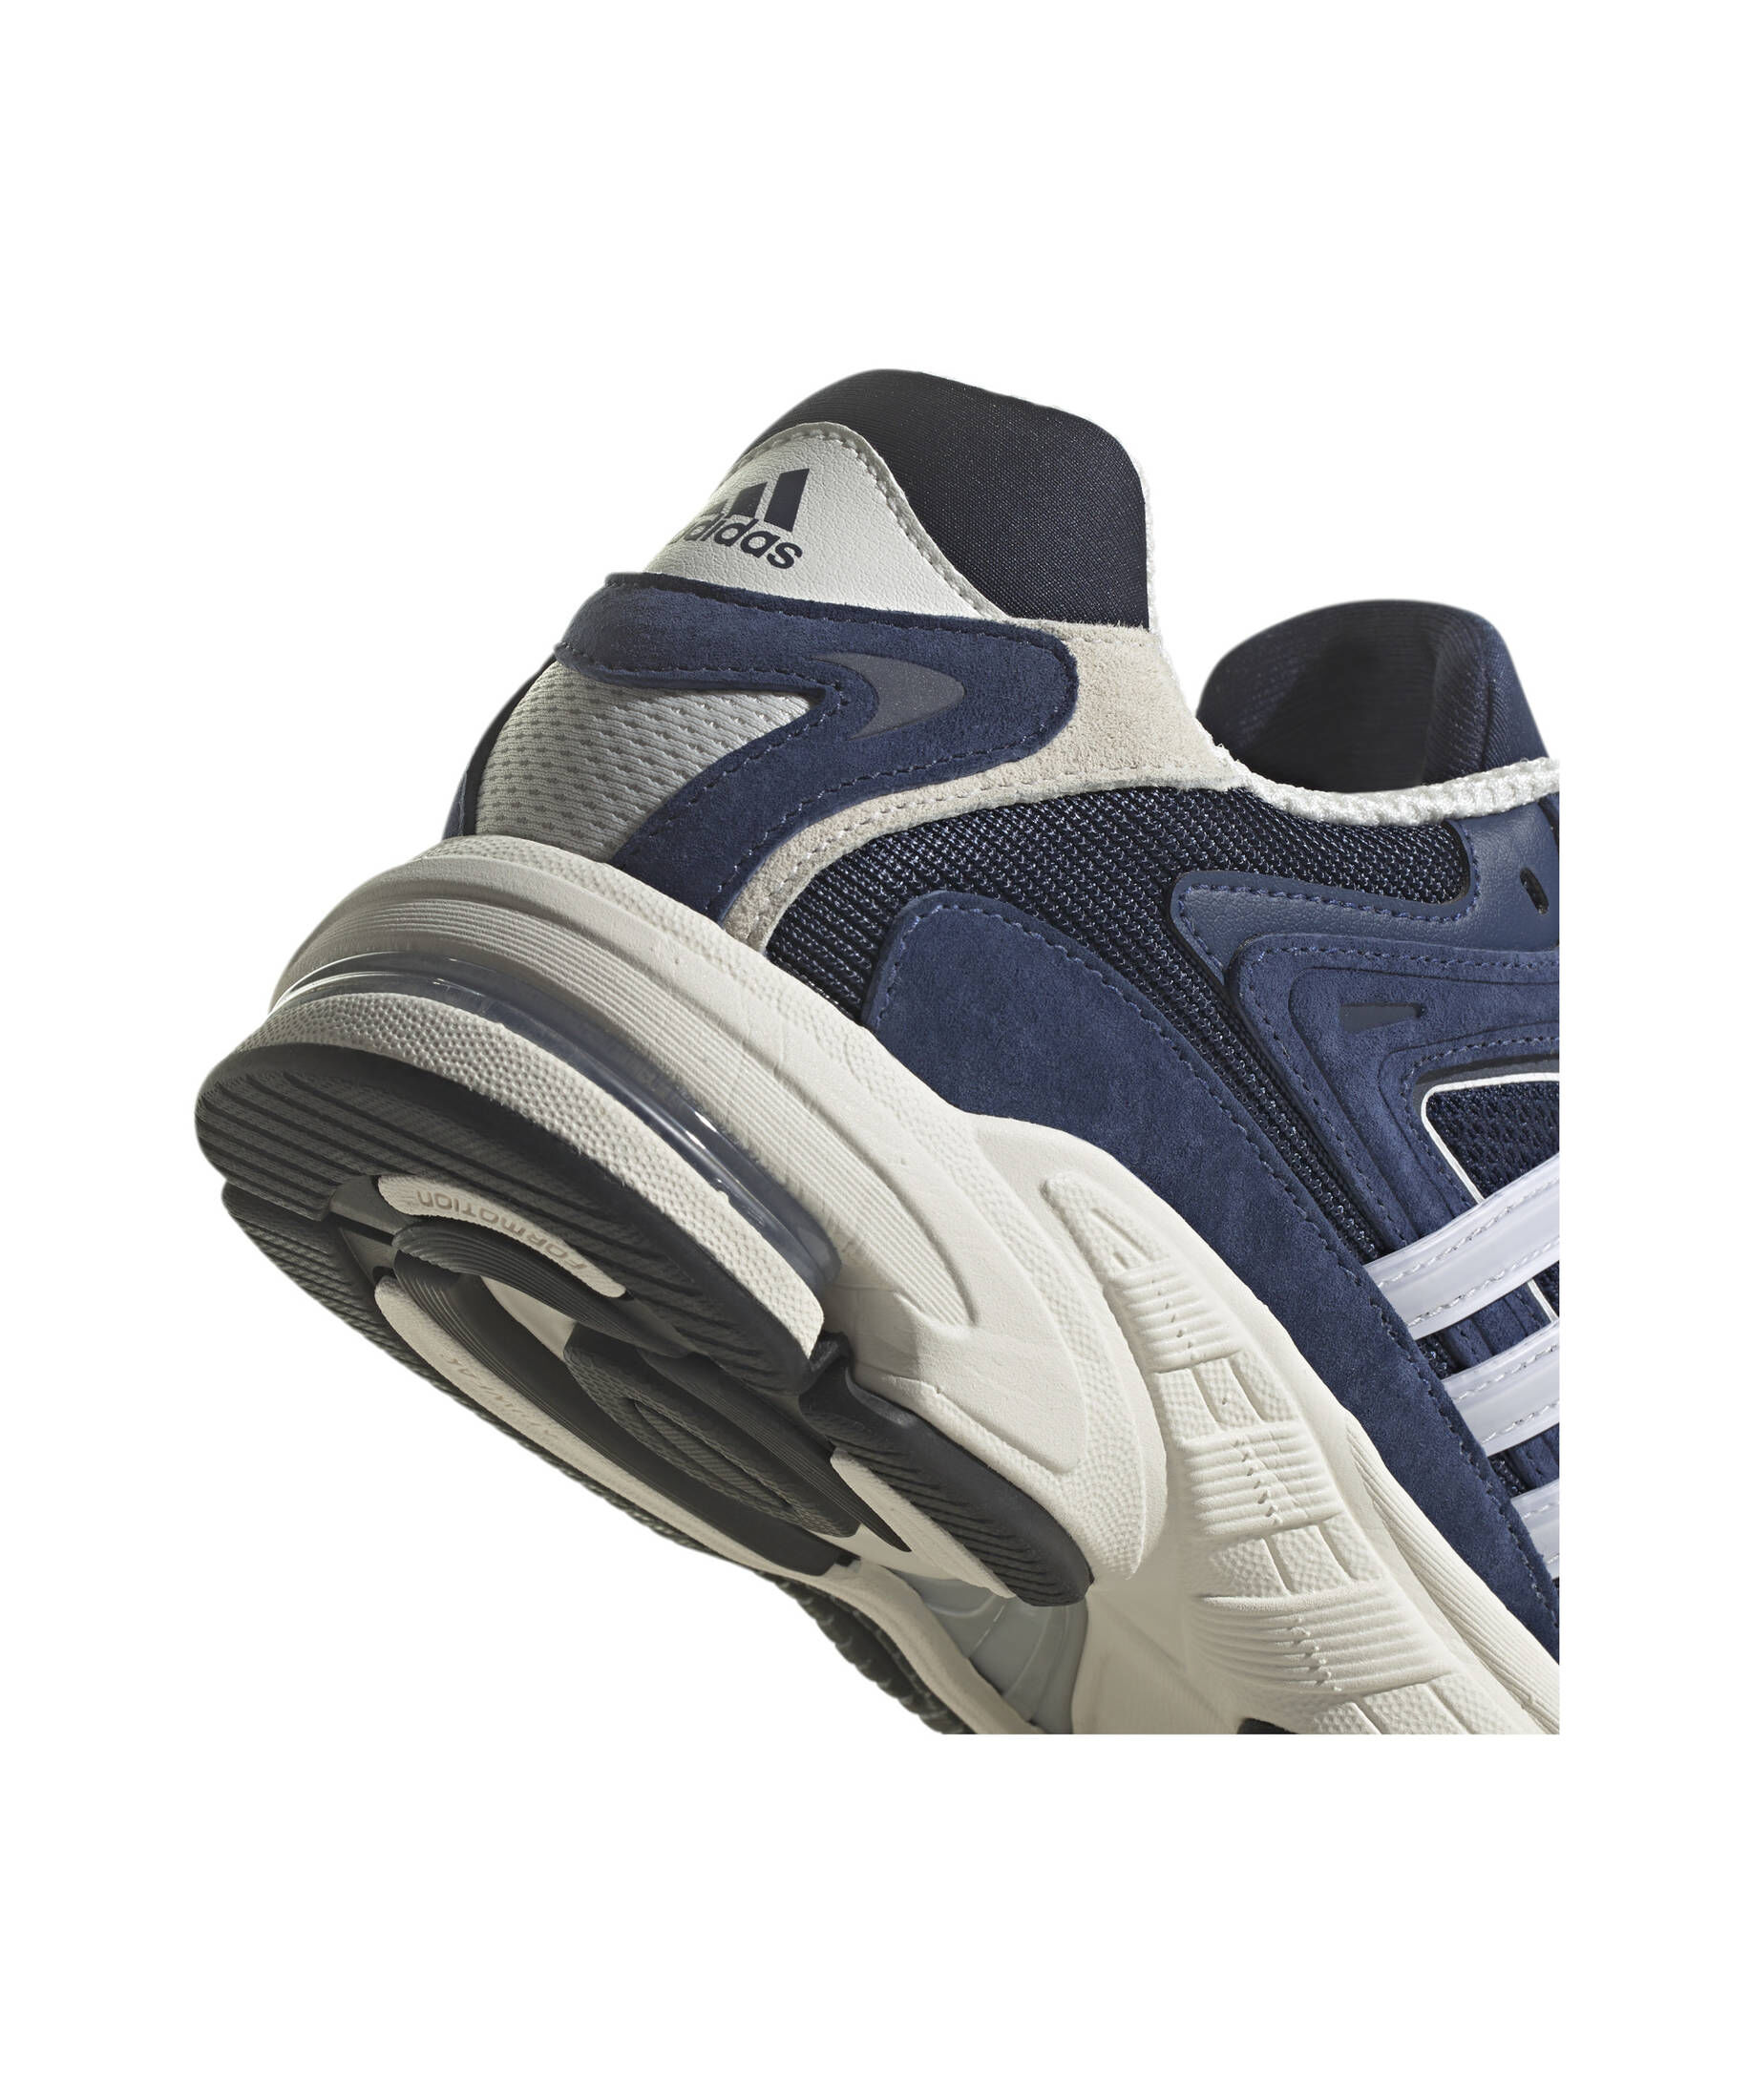 kaufen Lifestyle adidas - engelhorn Herren | Originals CL Beige Response Schuhe Herren - Sneakers